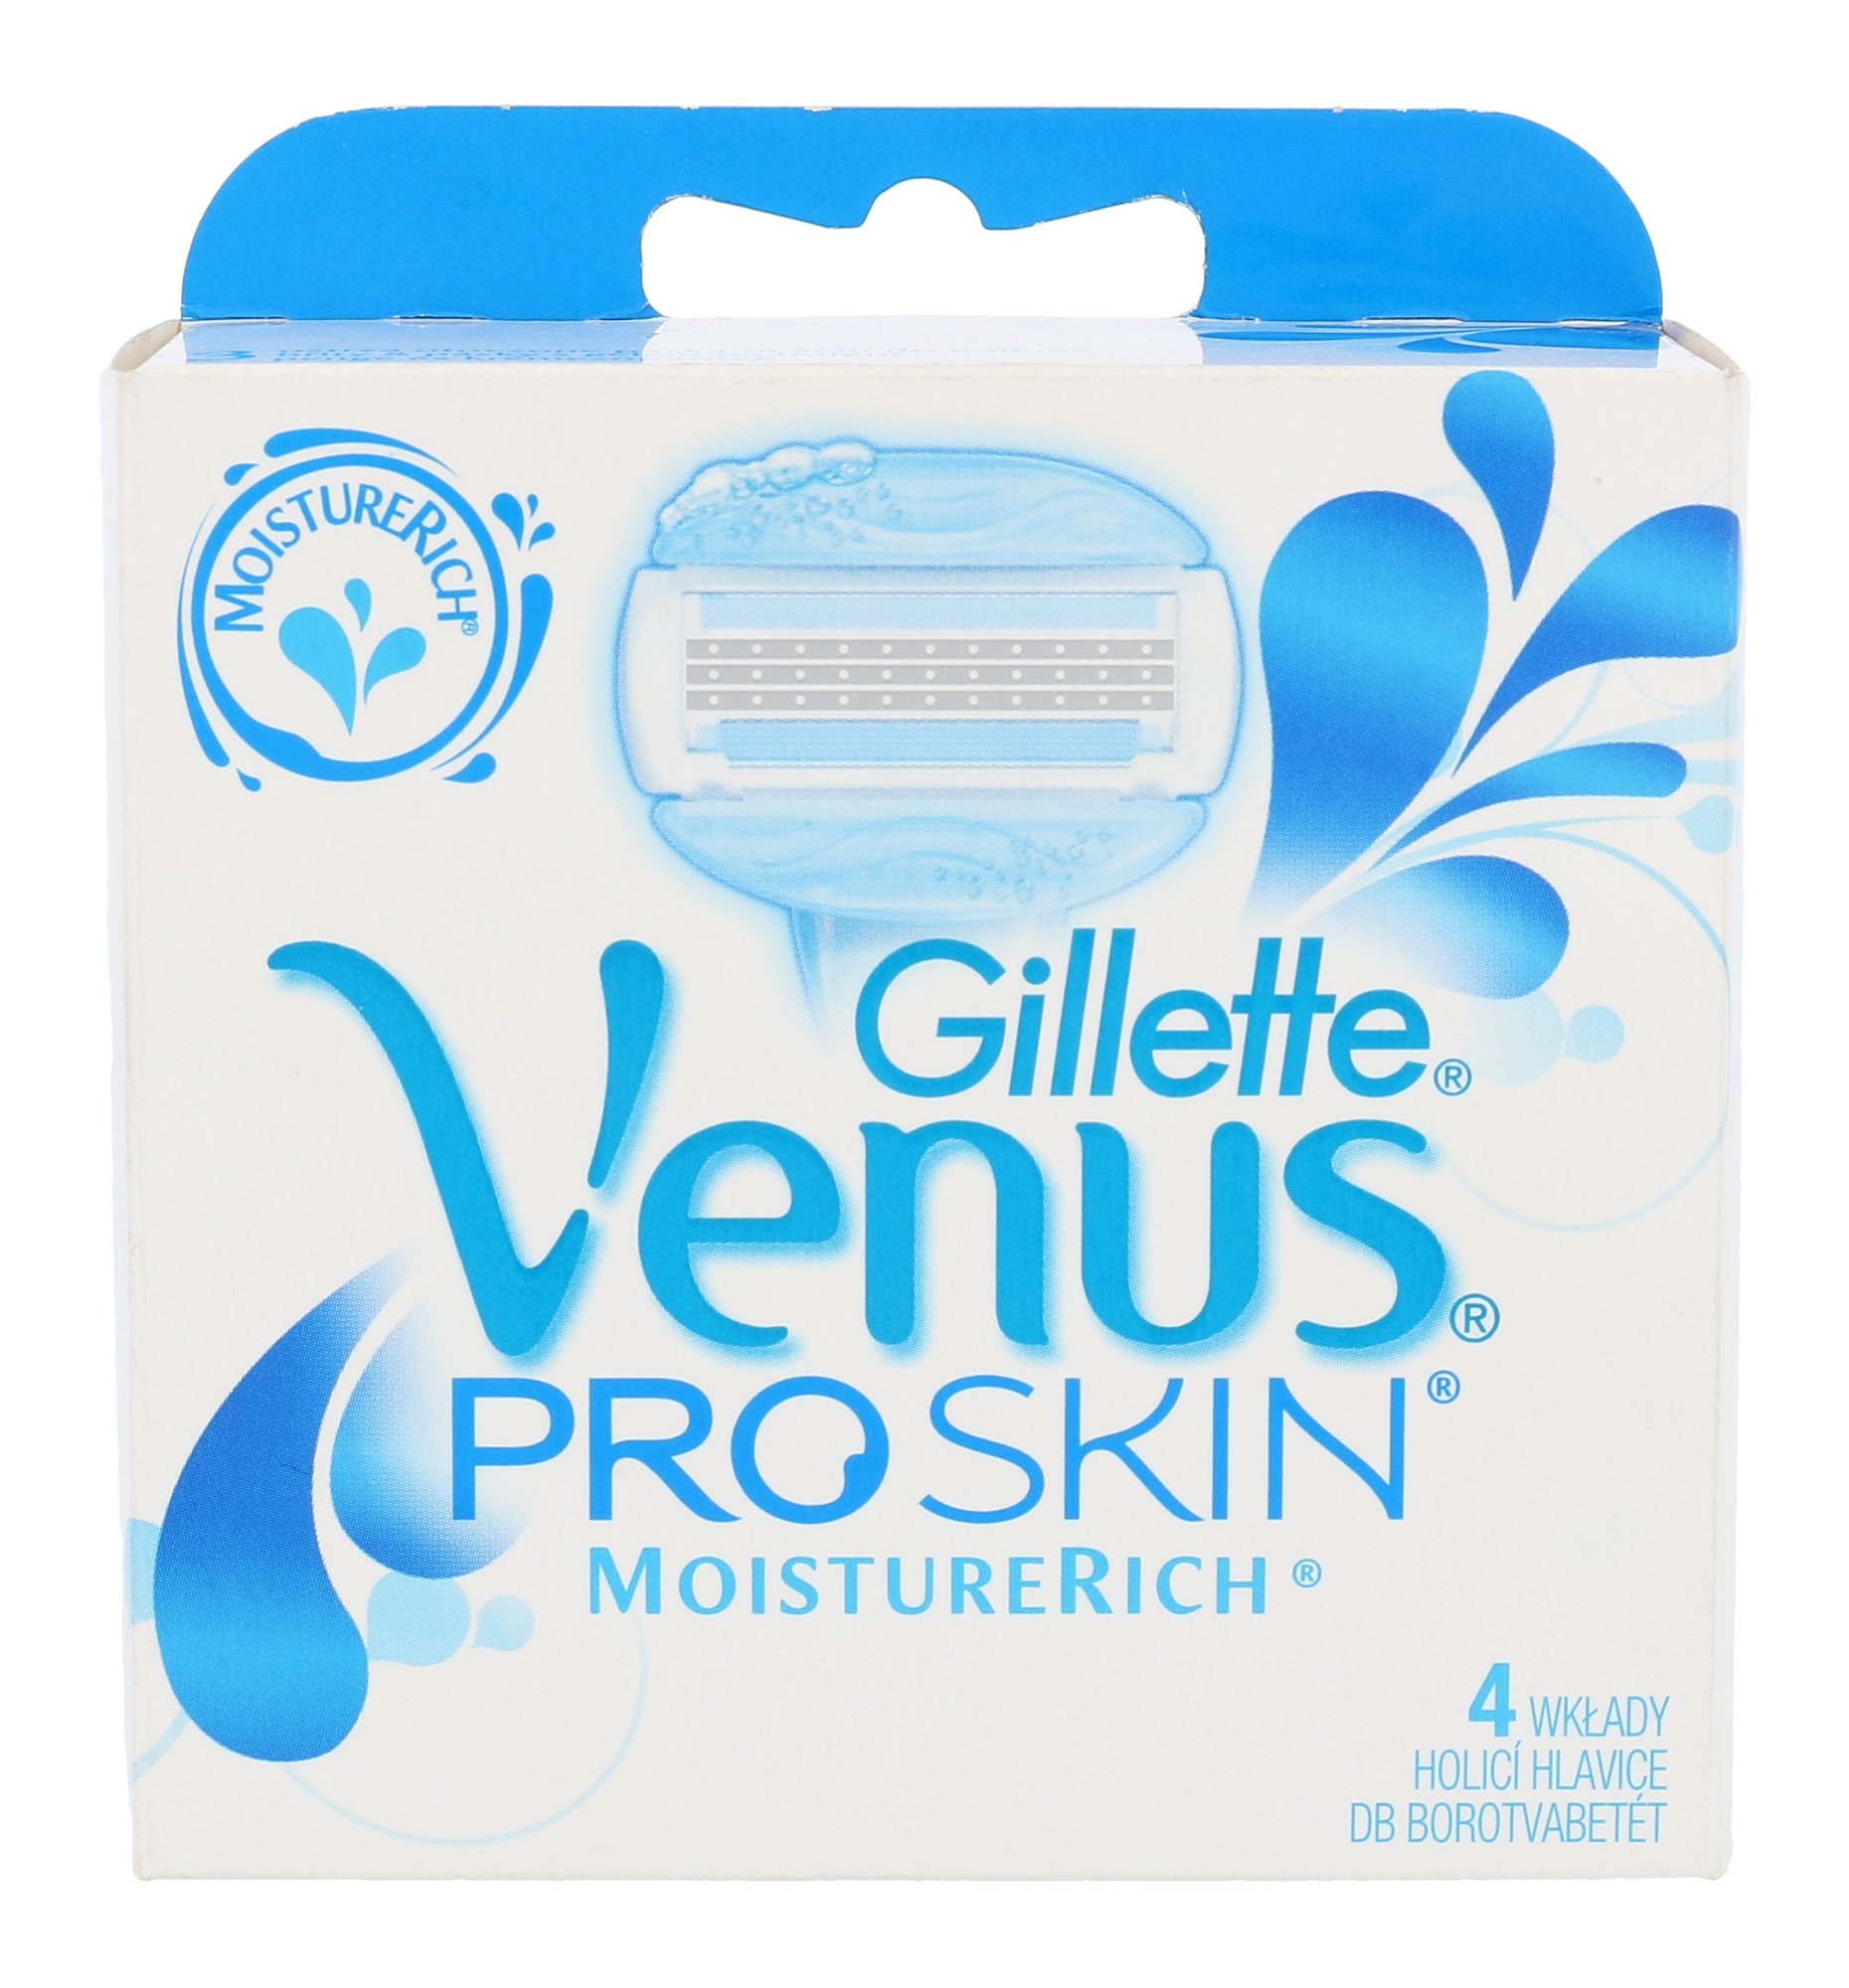 Gillette Venus ProSkin skustuvo galvutė